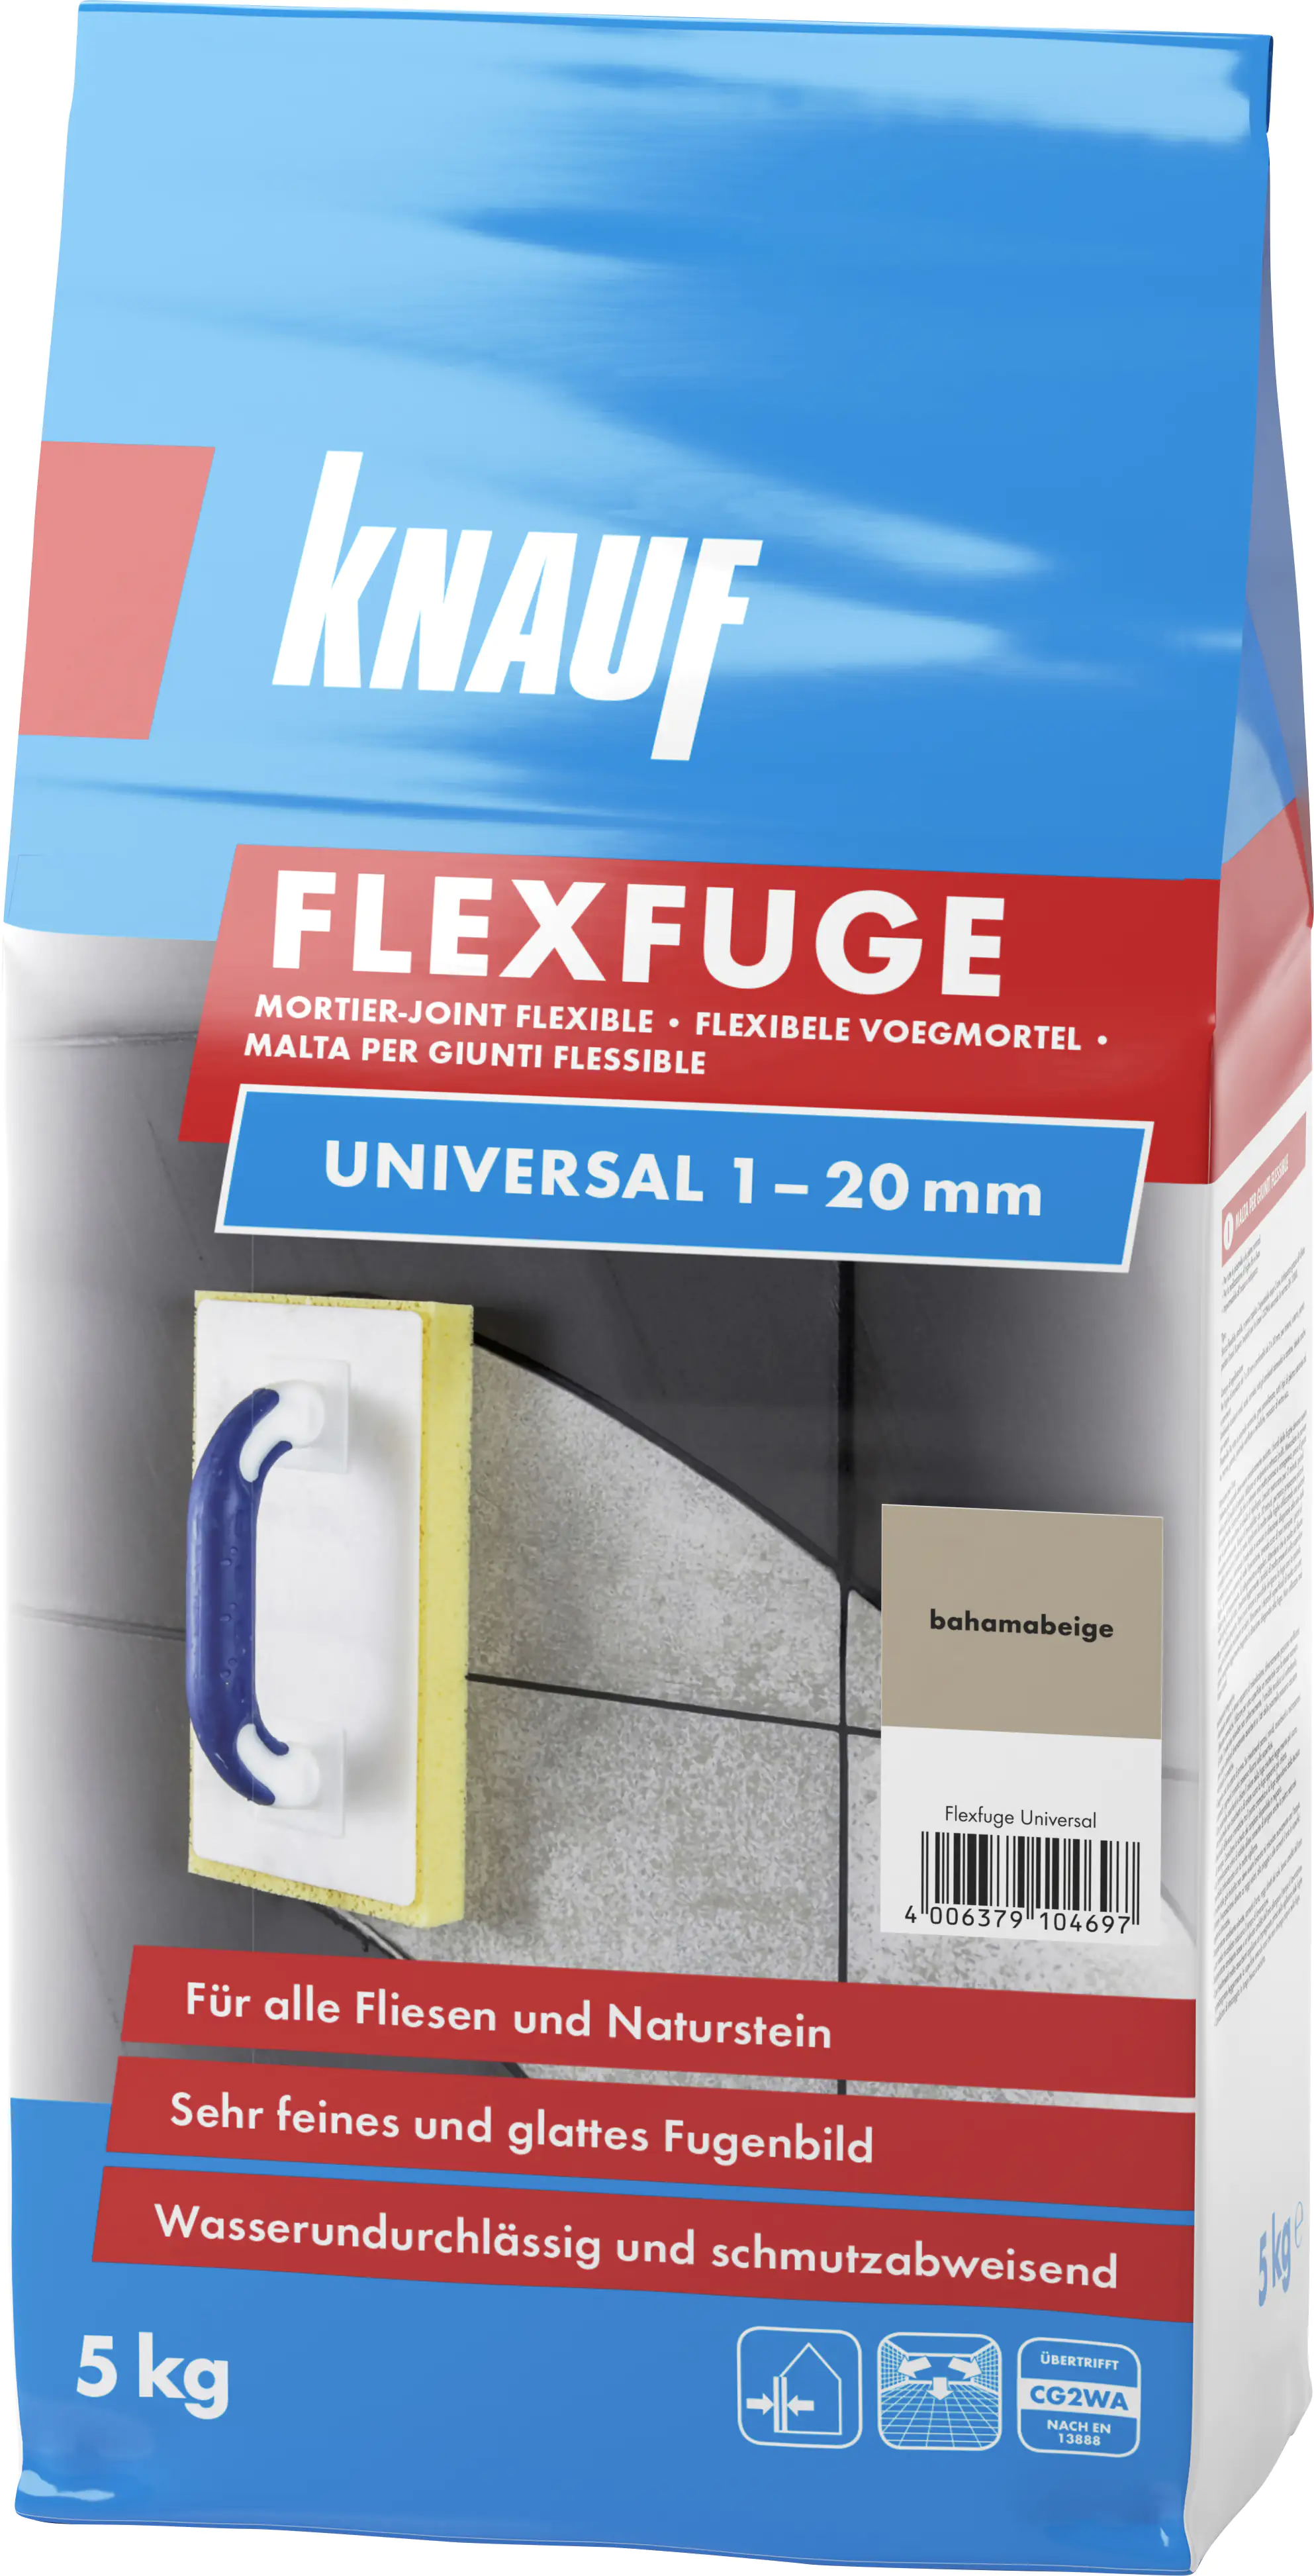 Knauf Fugenmörtel Flexfuge Globus bahamabeige 5 kg - Universal | kaufen mm Baumarkt 1 20